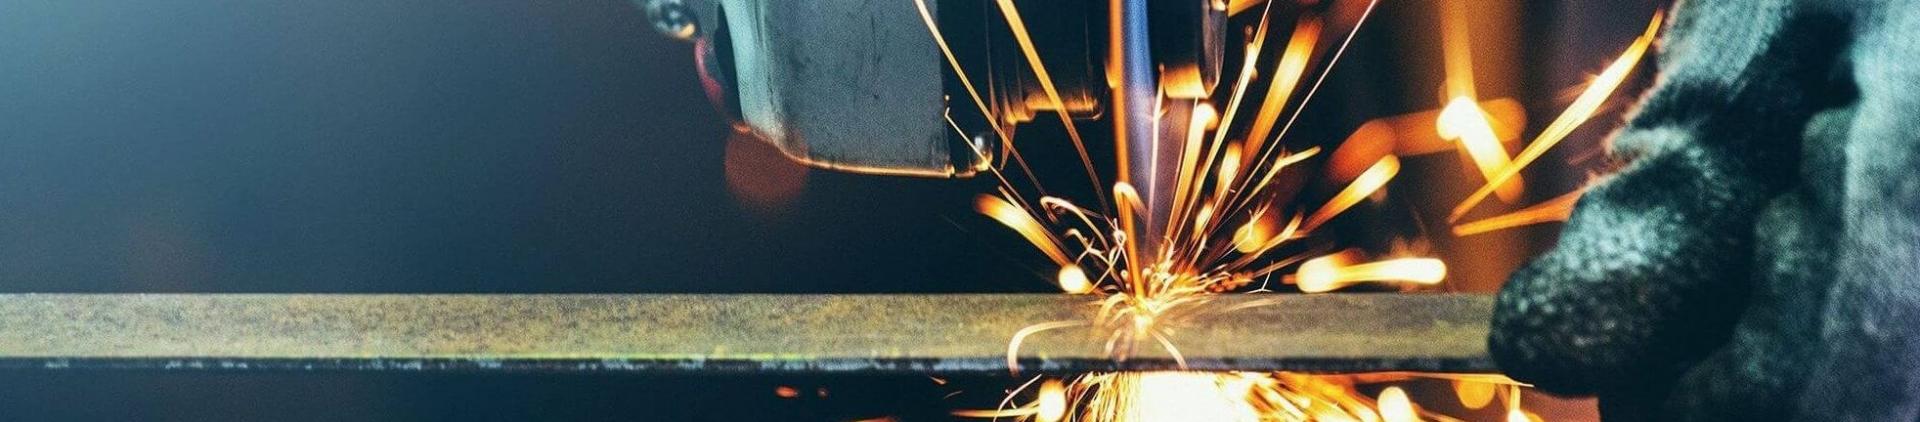 Ecomatin net filiere siderurgie metallurgie letat envisage larret des importations metallurgie 1